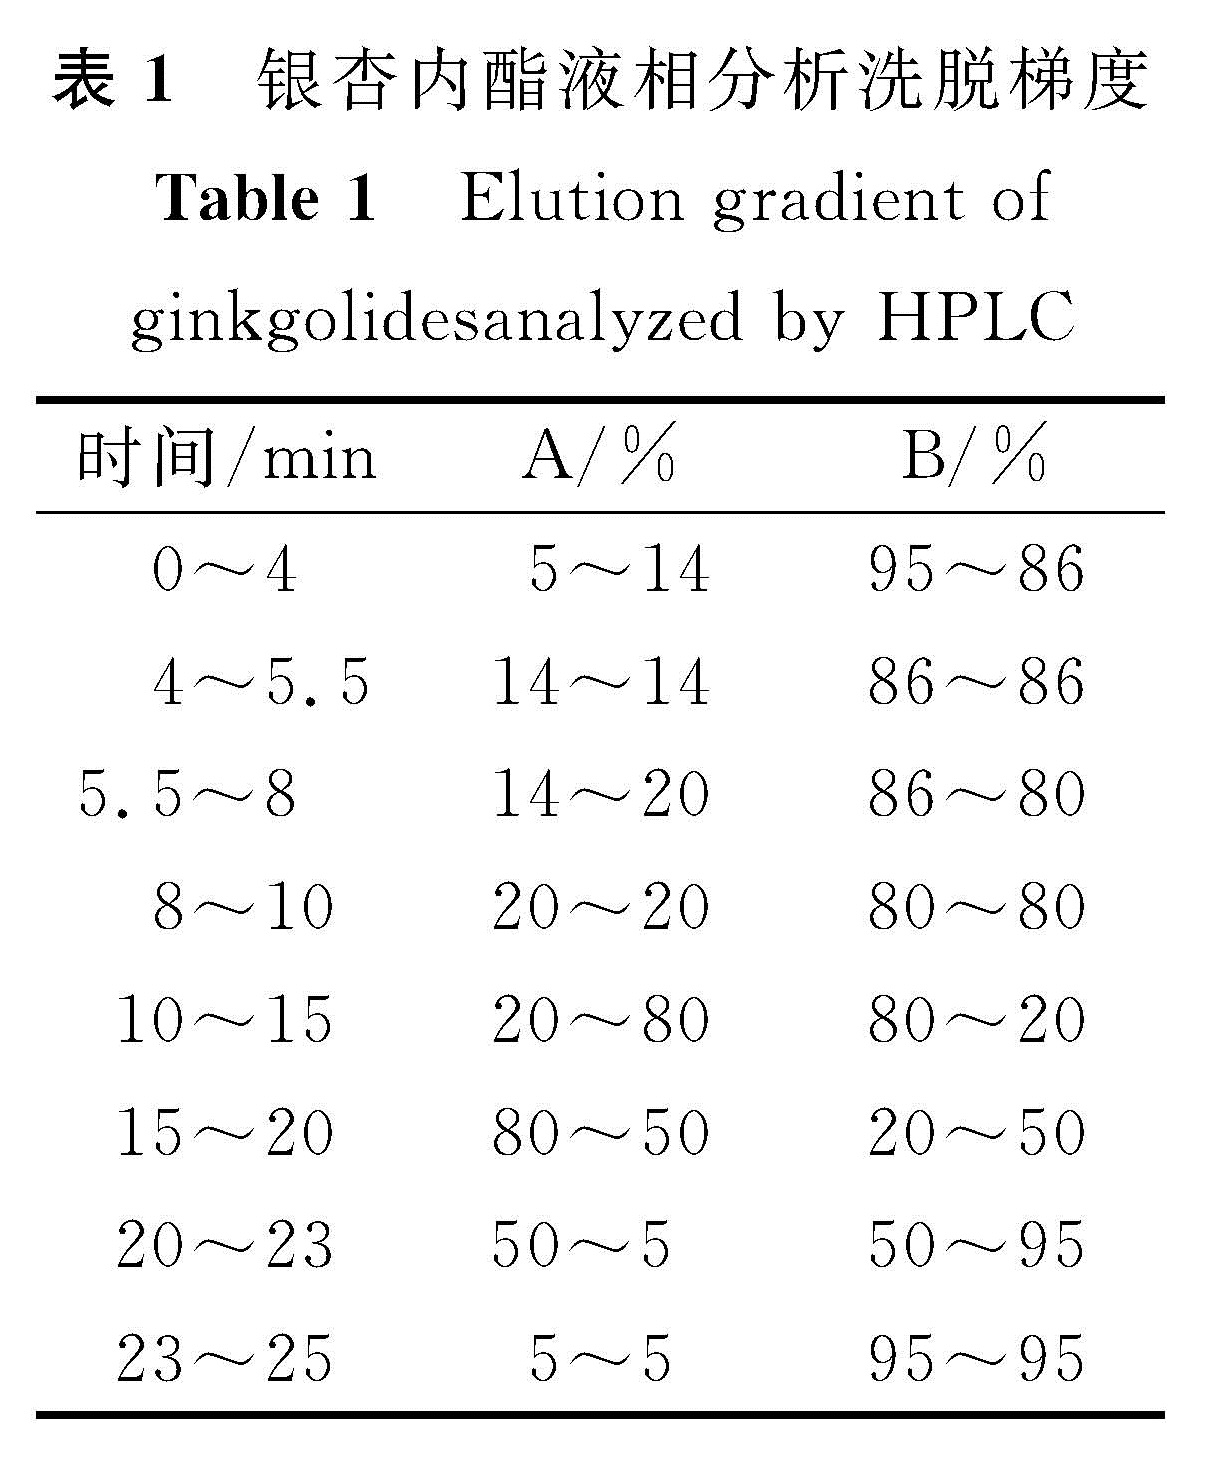 表1 银杏内酯液相分析洗脱梯度<br/>Table 1 Elution gradient of ginkgolidesanalyzed by HPLC